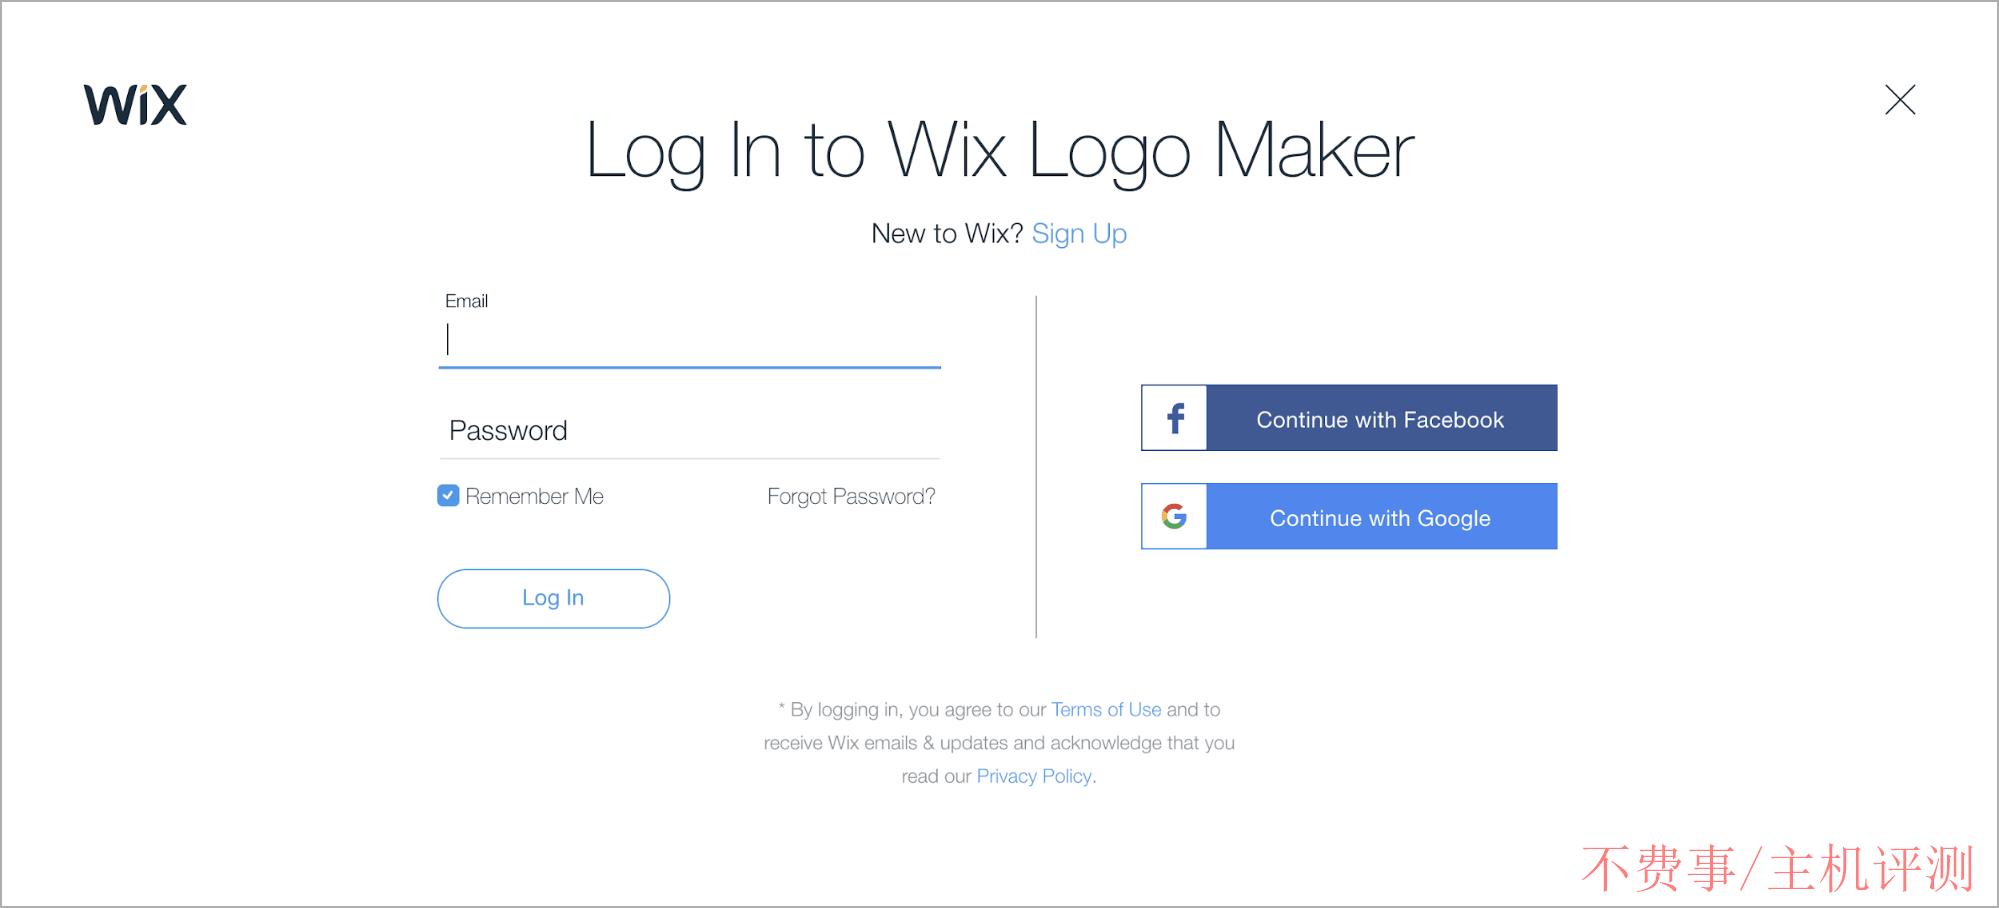 Wix Logo Maker screenshot - Login